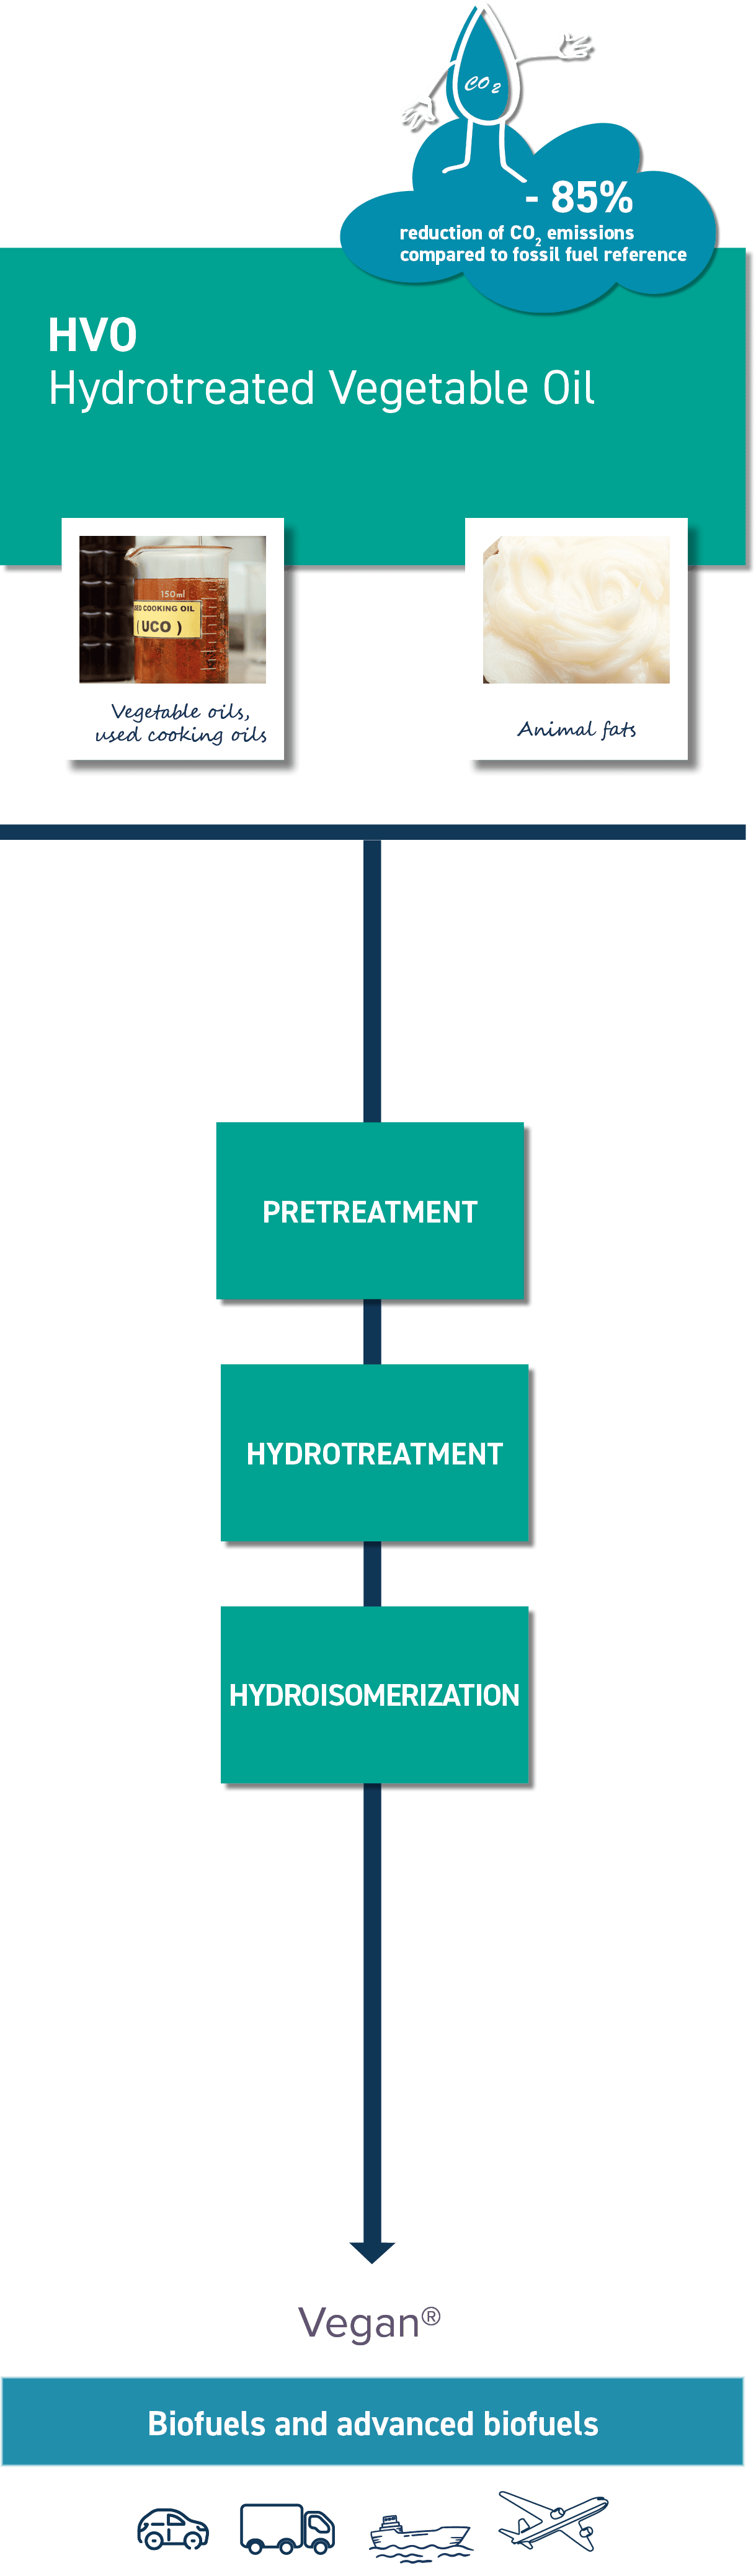 Hydrotreatment of vegetable oils (HVO)